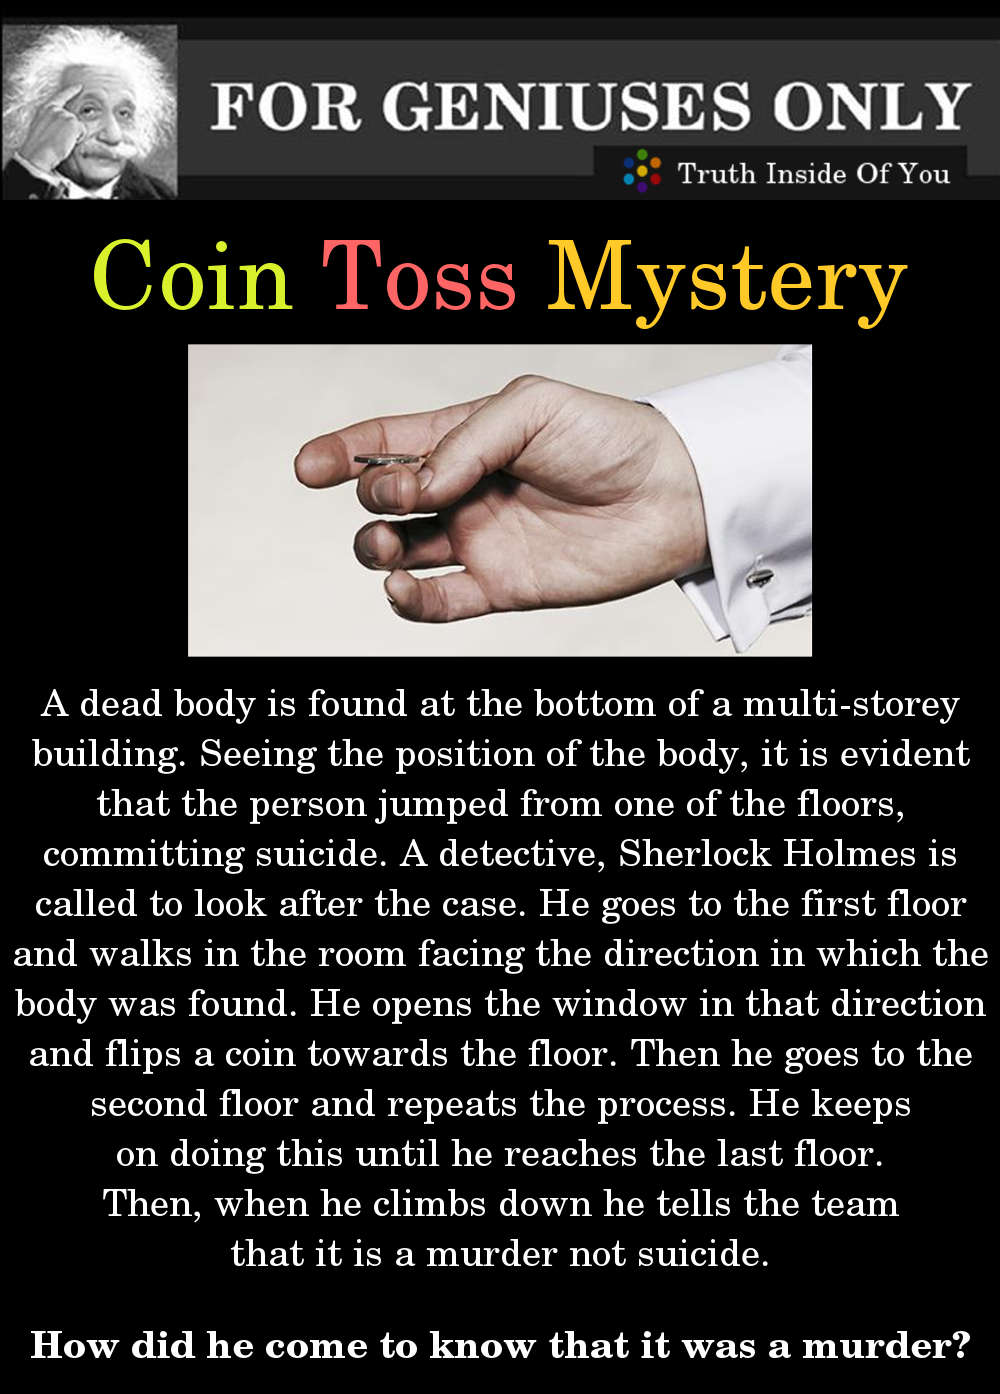 Coin Toss Mystery